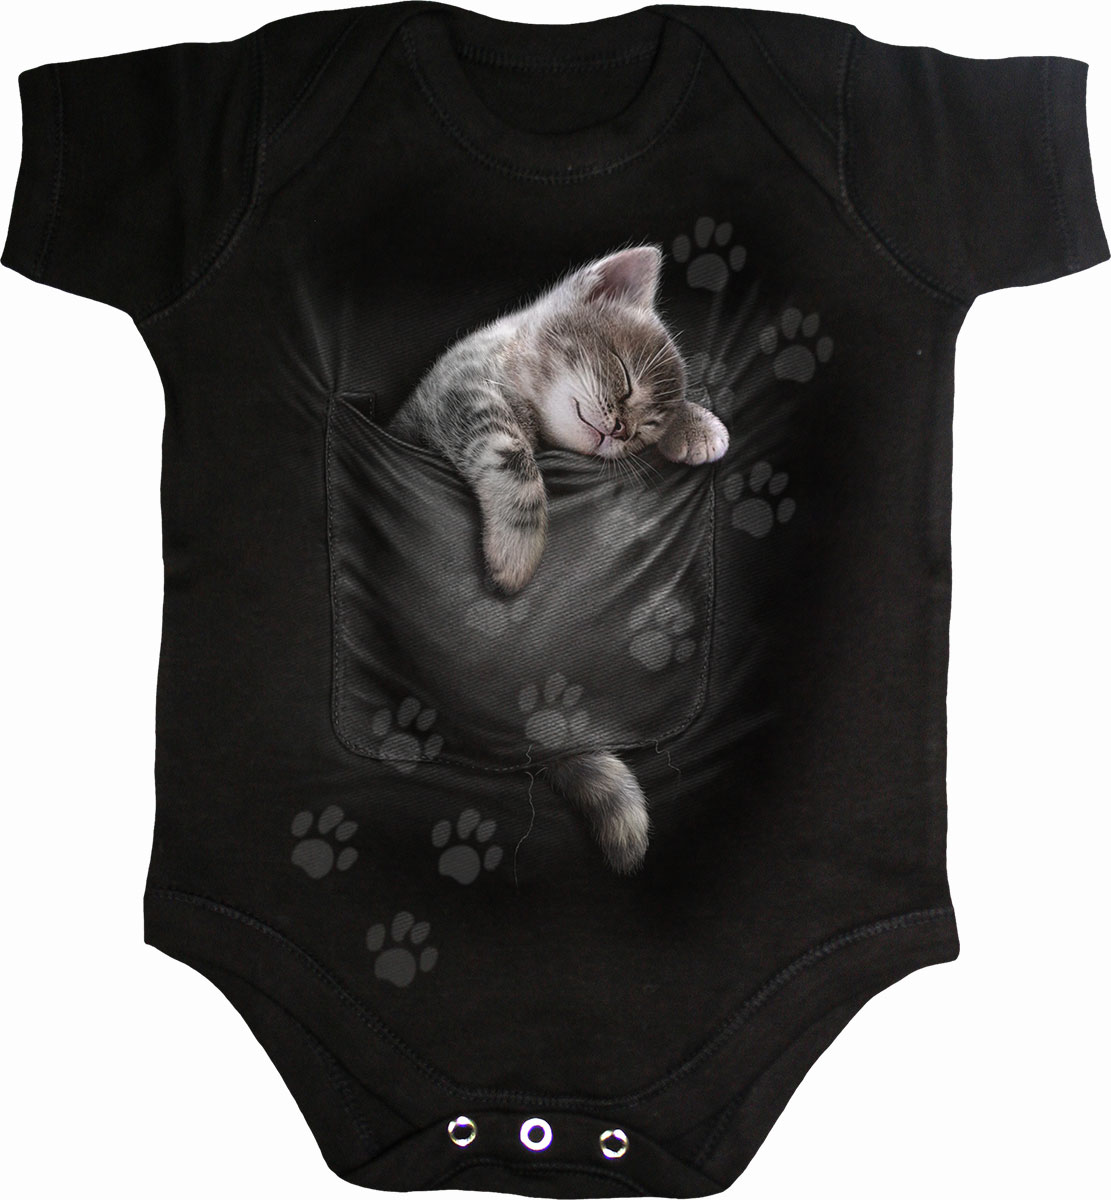 Pocket Kitten Baby Sleepsuit Black